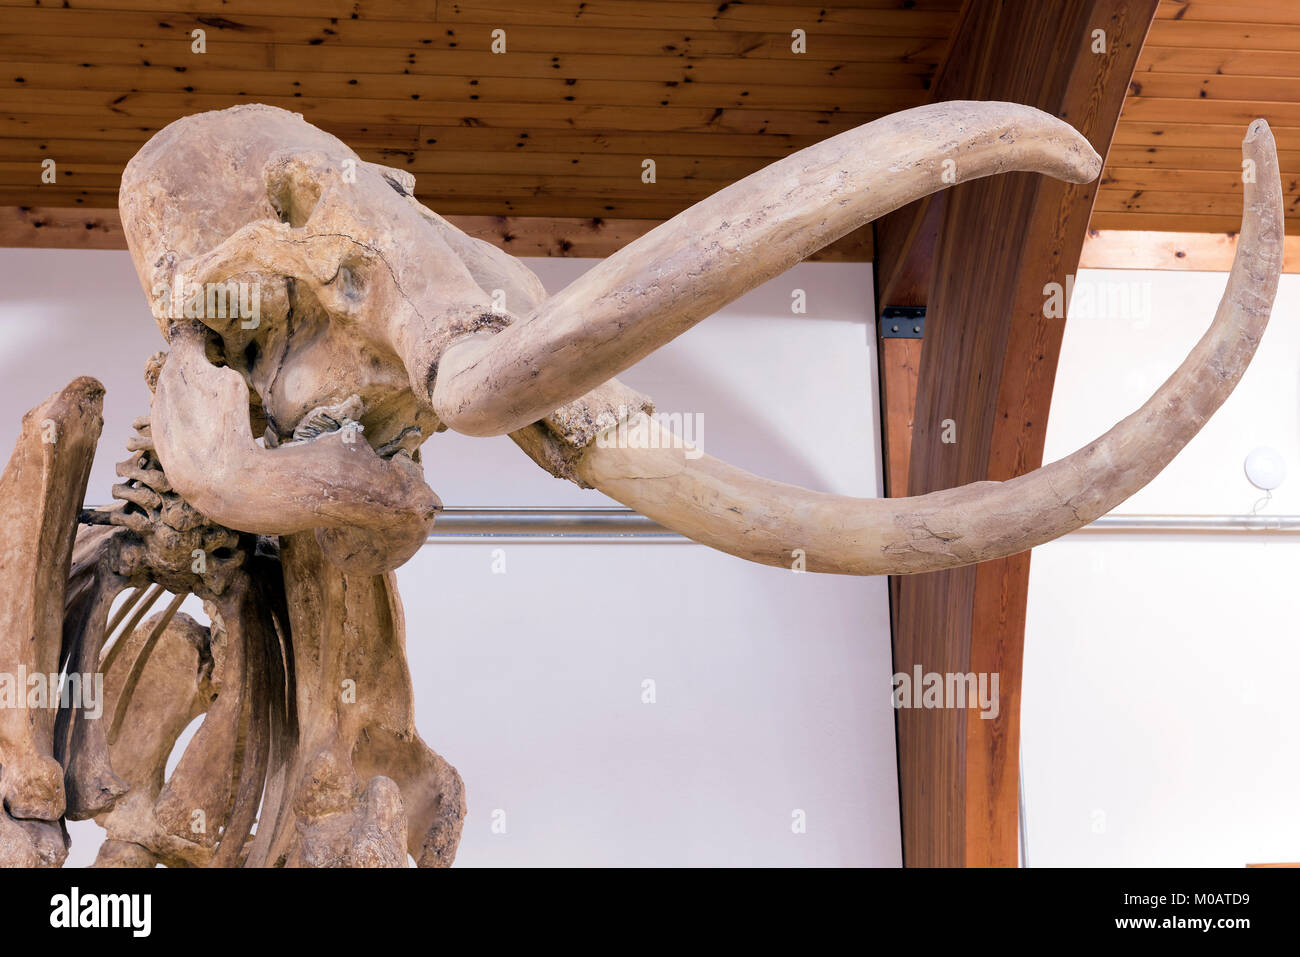 Skelett von Wolly Mammoth Hot Springs, S. Dakota, USA, von Dominique Braud/Dembinsky Foto Assoc Stockfoto